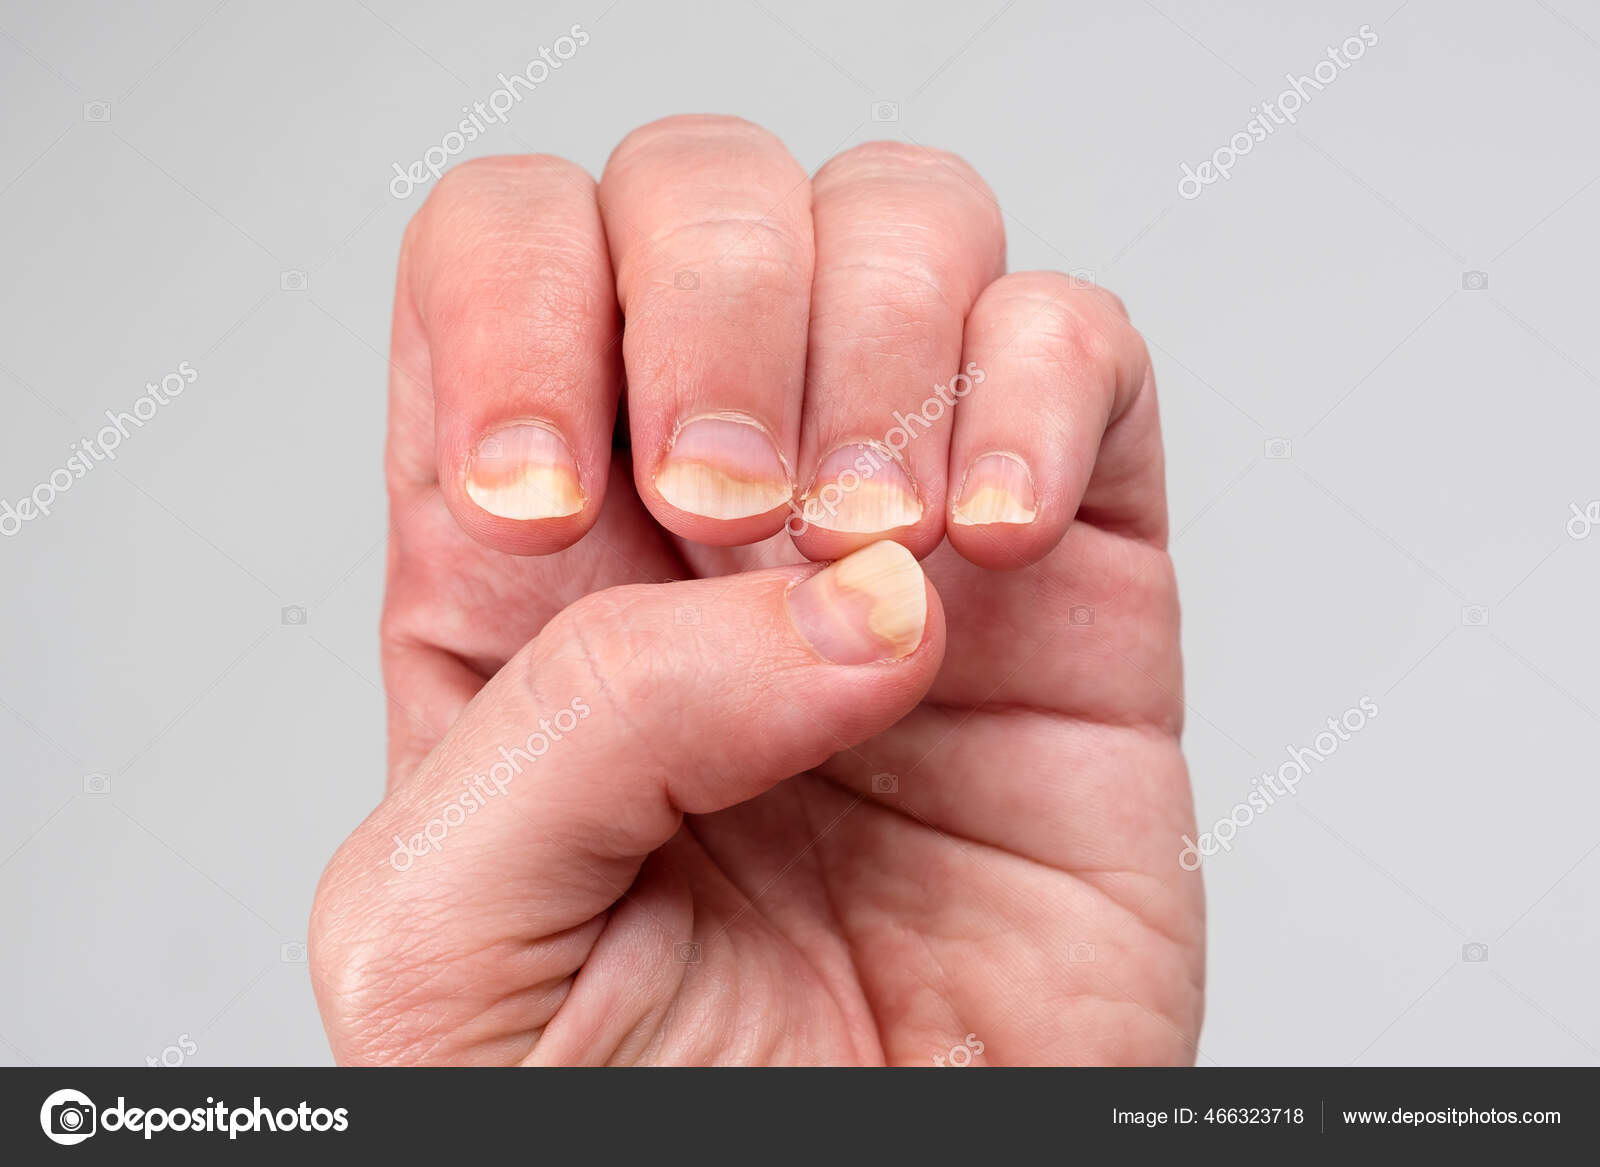 Paronychia Disease of the Fingernail Injury Skin Aches Redness Disease  Painful Healing Painful Problem Stock Image - Image of ingrown, disease:  253760901